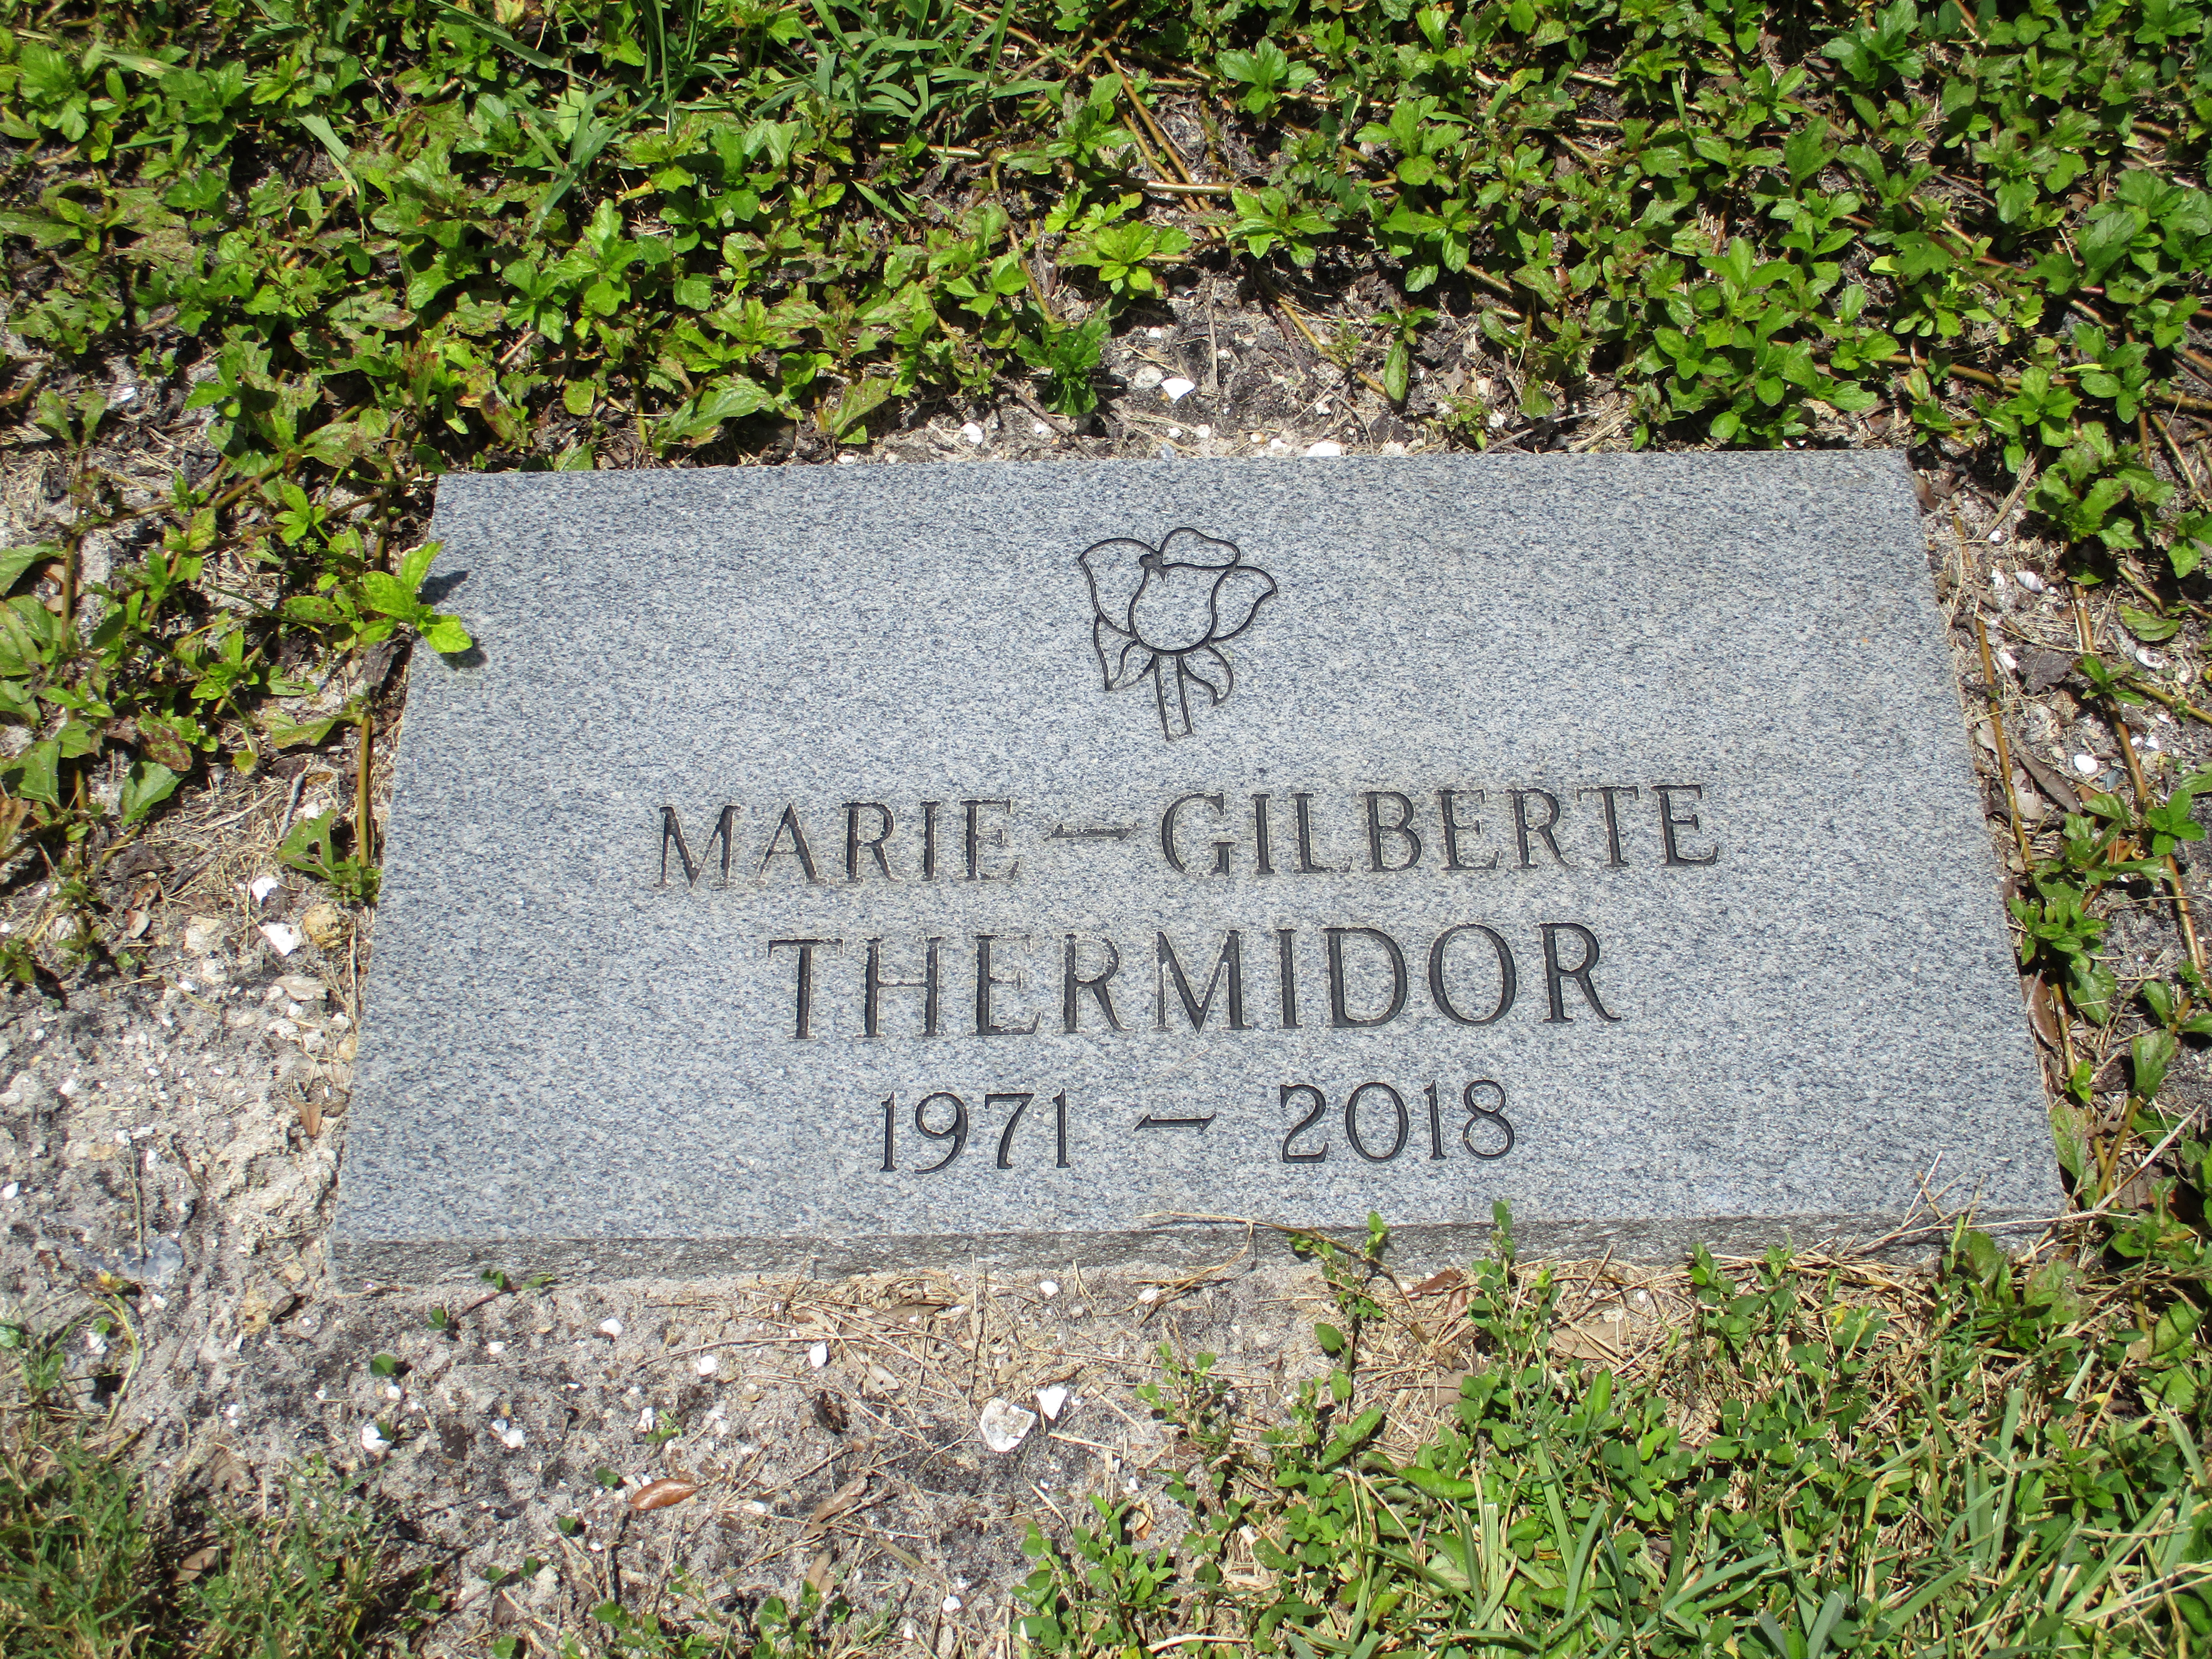 Marie-Gilberte Thermidor